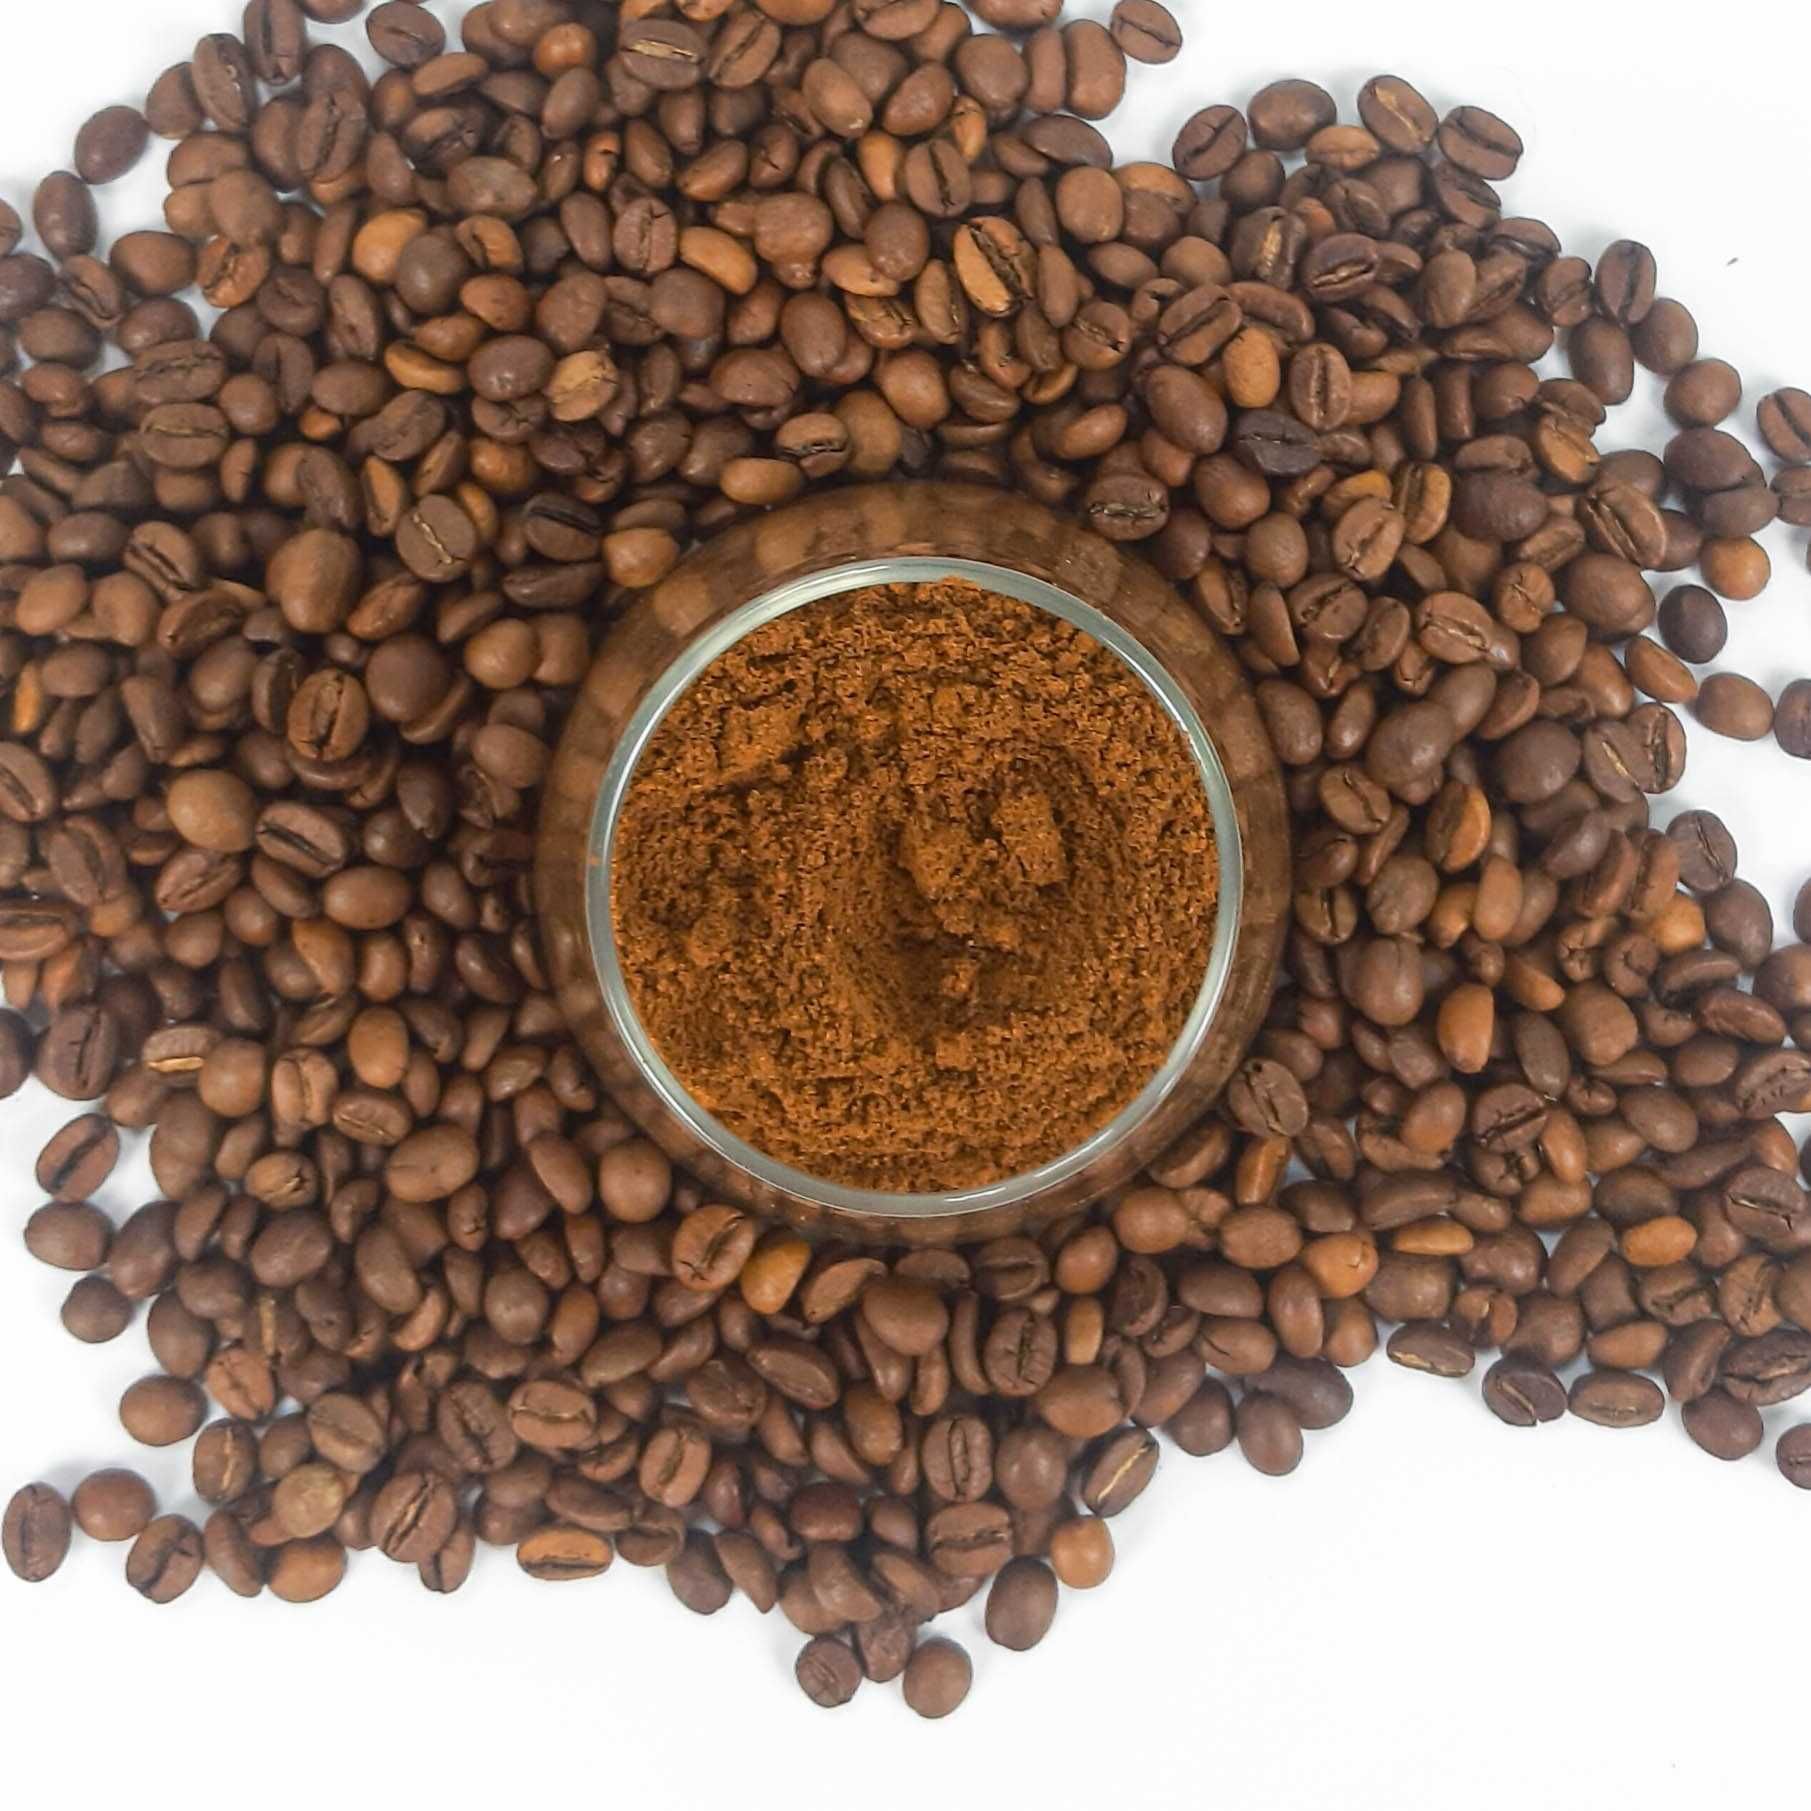 ІДЕАЛЬНО збалансована мелена кава купаж 80%20%. Смачніша ніж брендова!